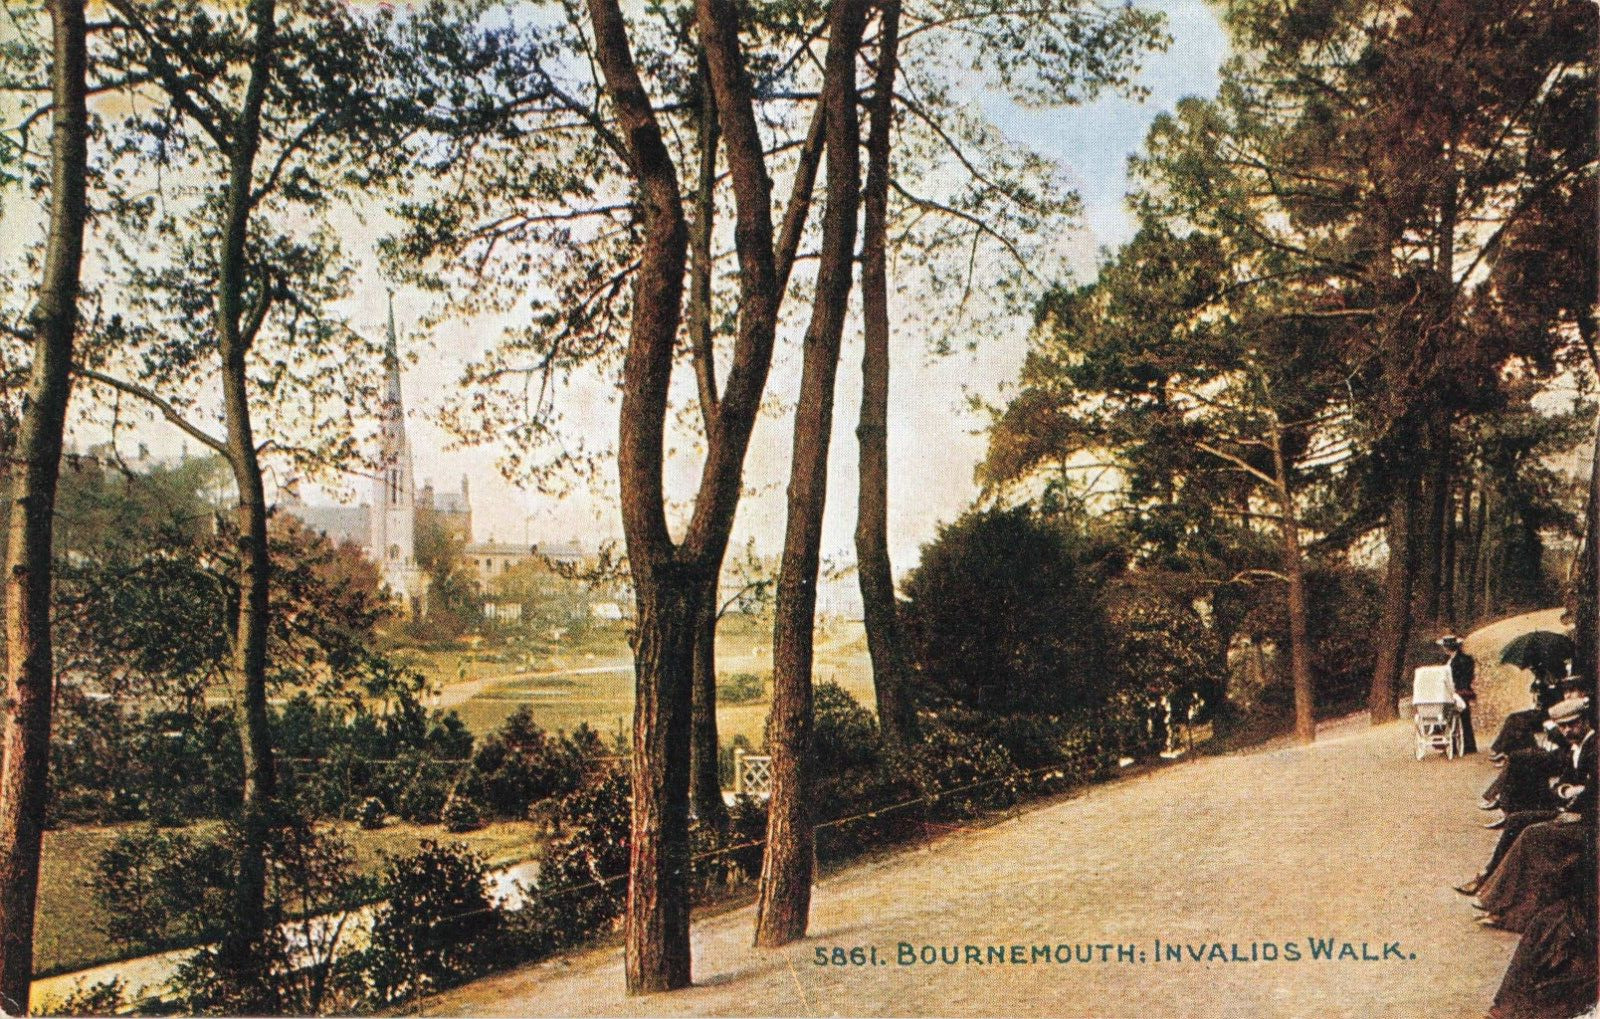 Bournemouth Dorset England, Invalids Walk, Vintage Postcard